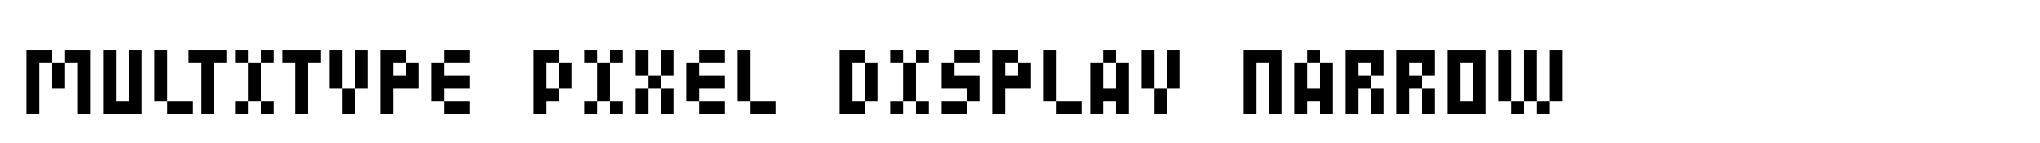 MultiType Pixel Display Narrow image